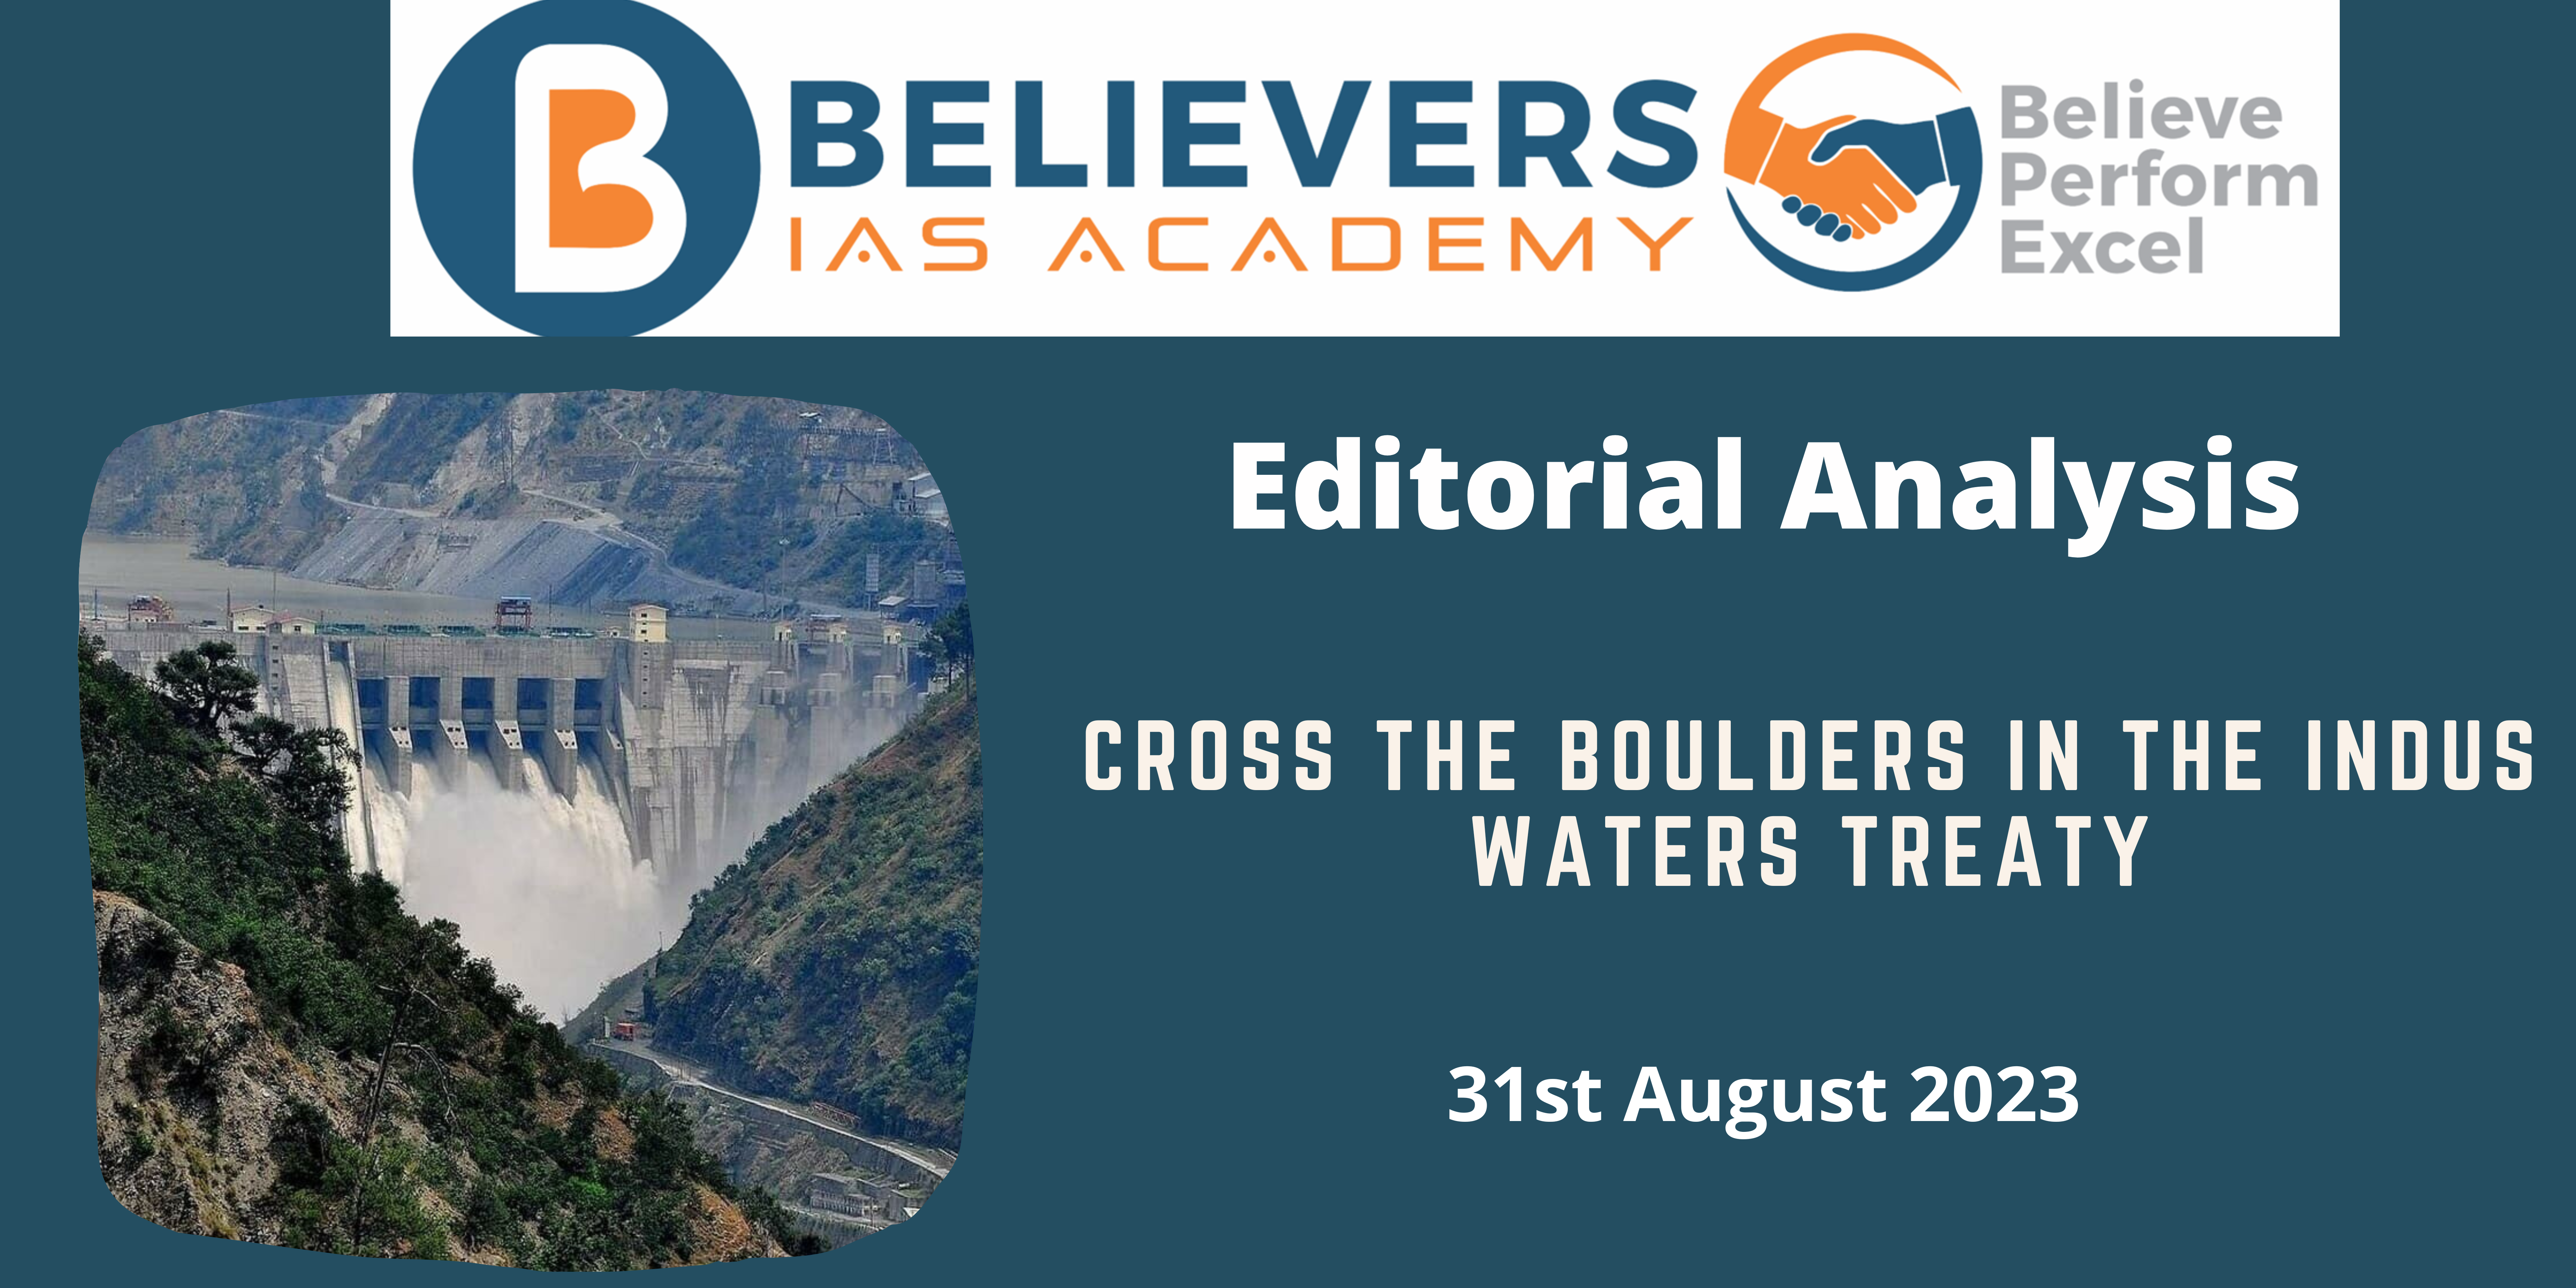 Cross the boulders in the Indus Waters Treaty